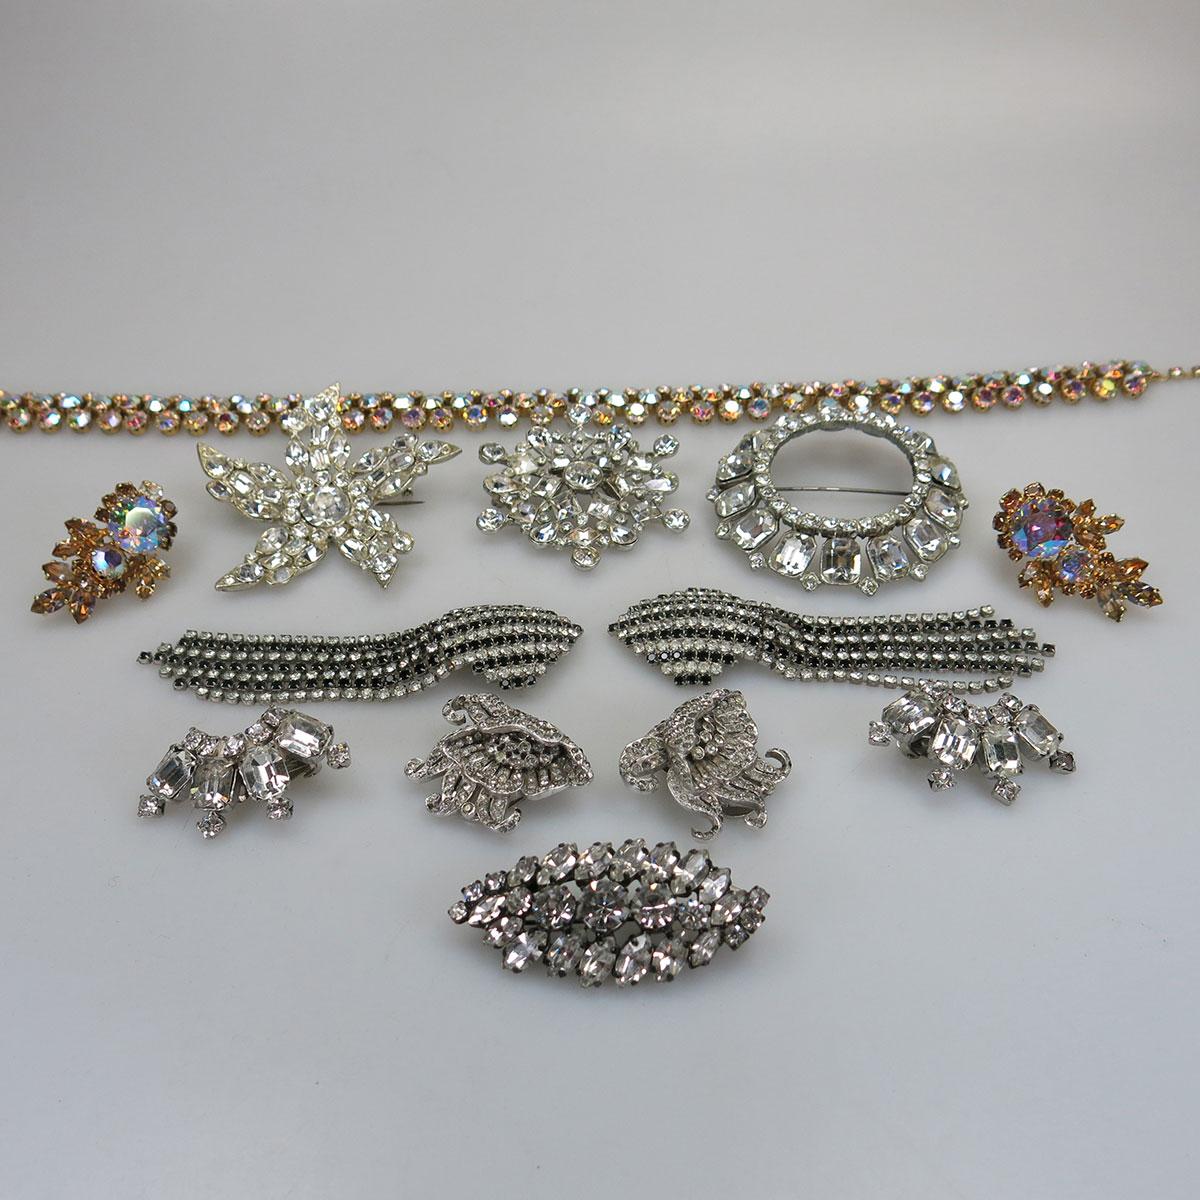 Small Quantity Of Rhinestone Jewellery